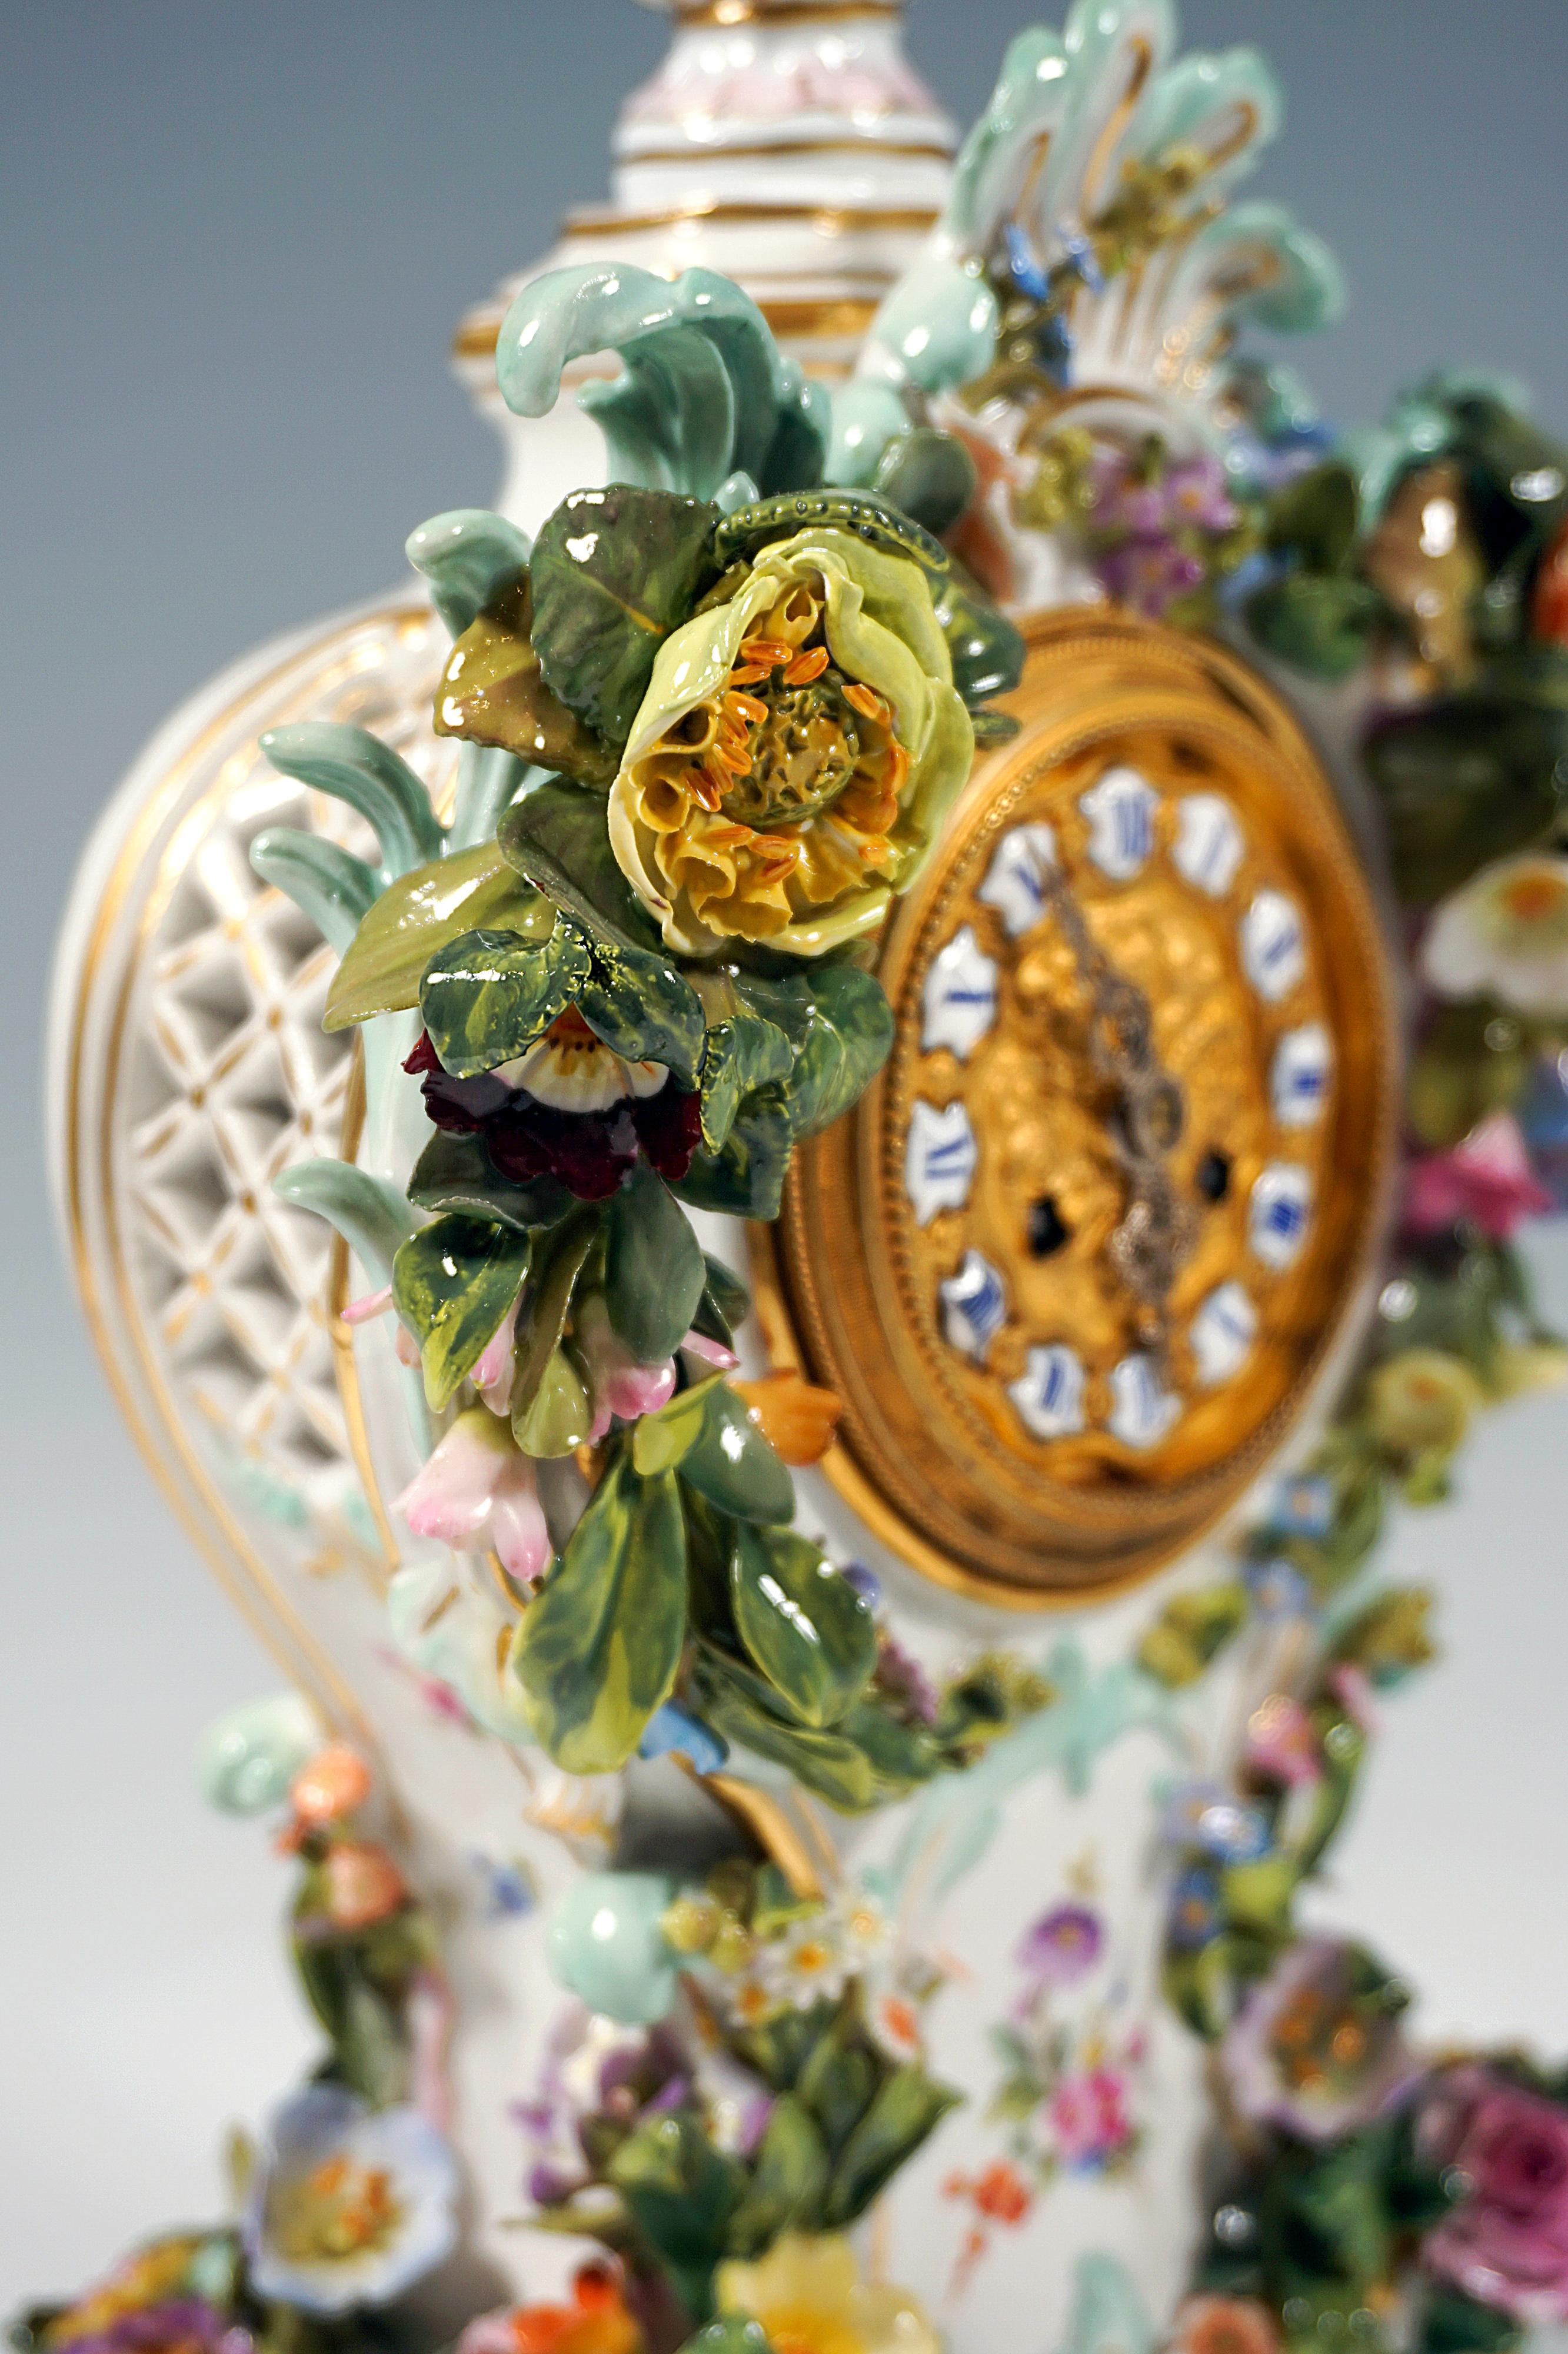 Mid-19th Century Meissen Splendour Clock with Flowers by J.J. Kaendler, Gernamy Around 1850